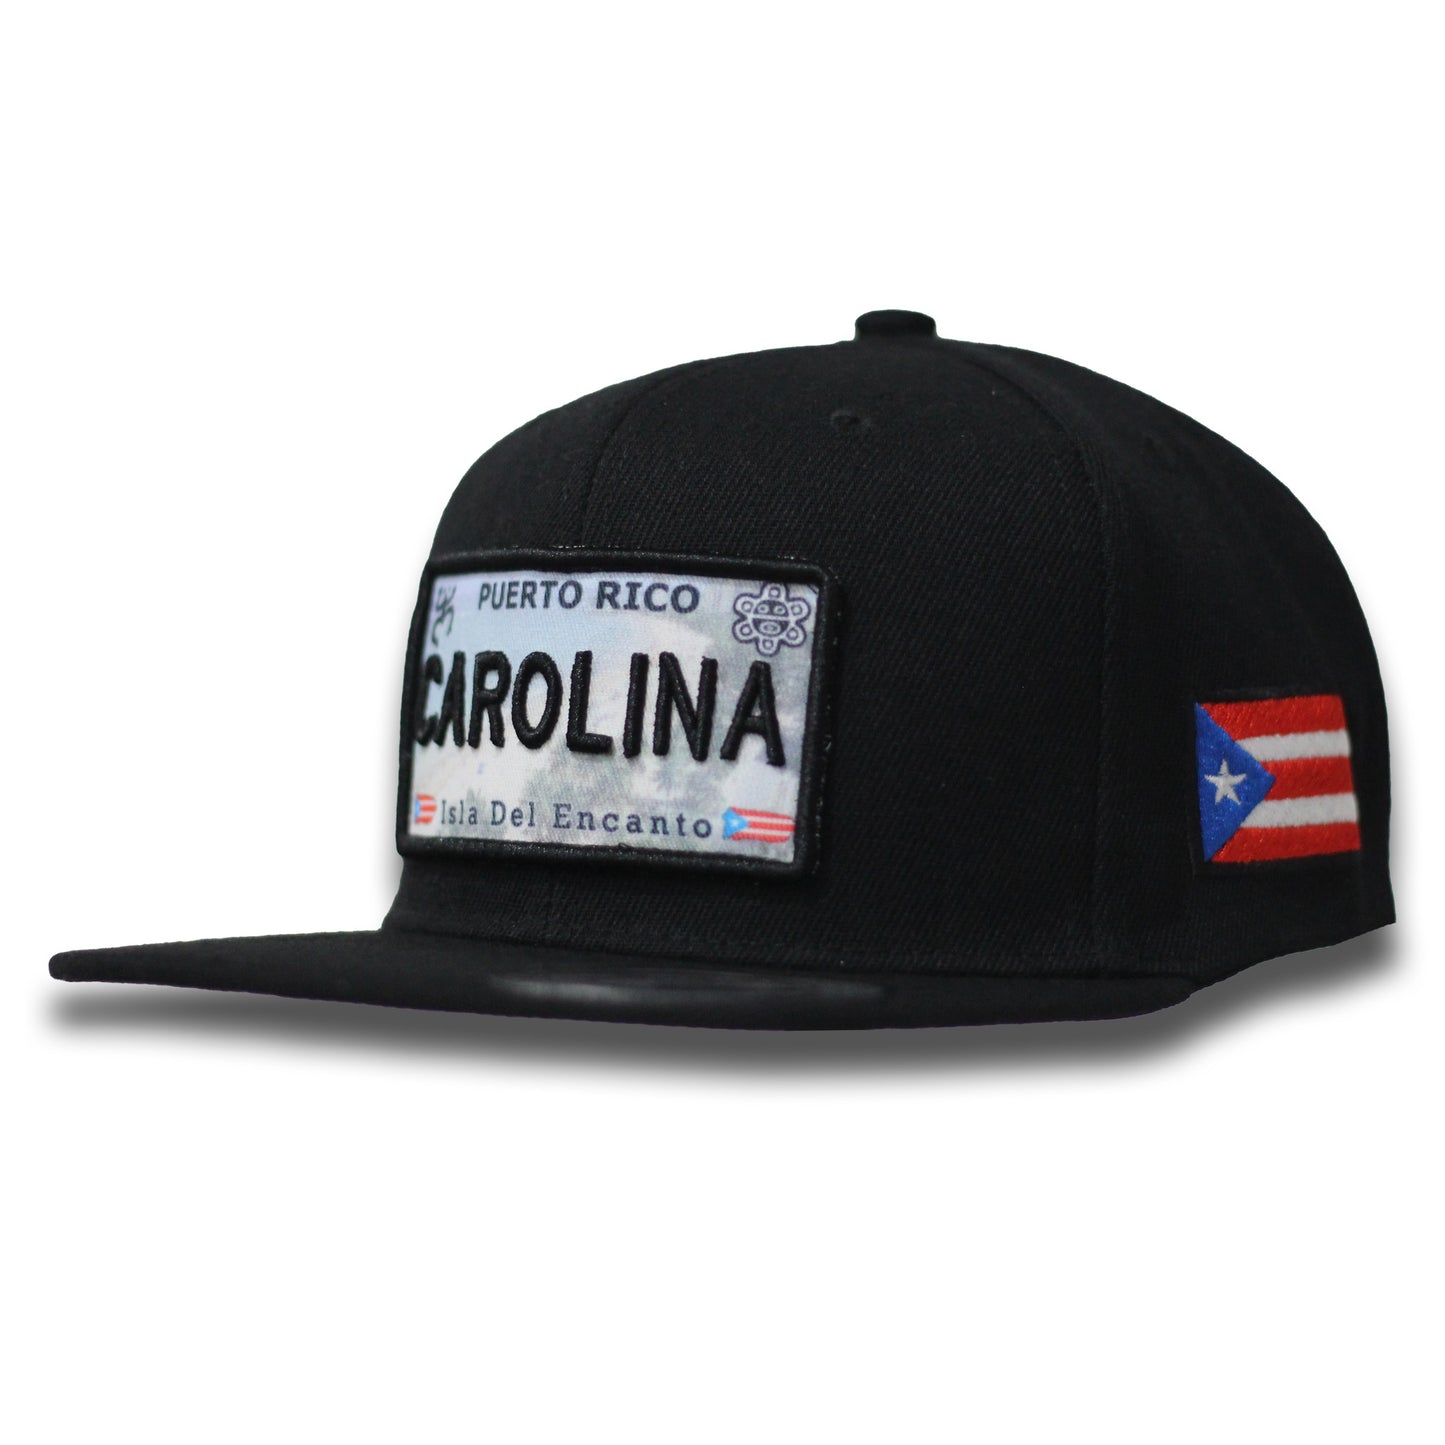 Carolina Hat